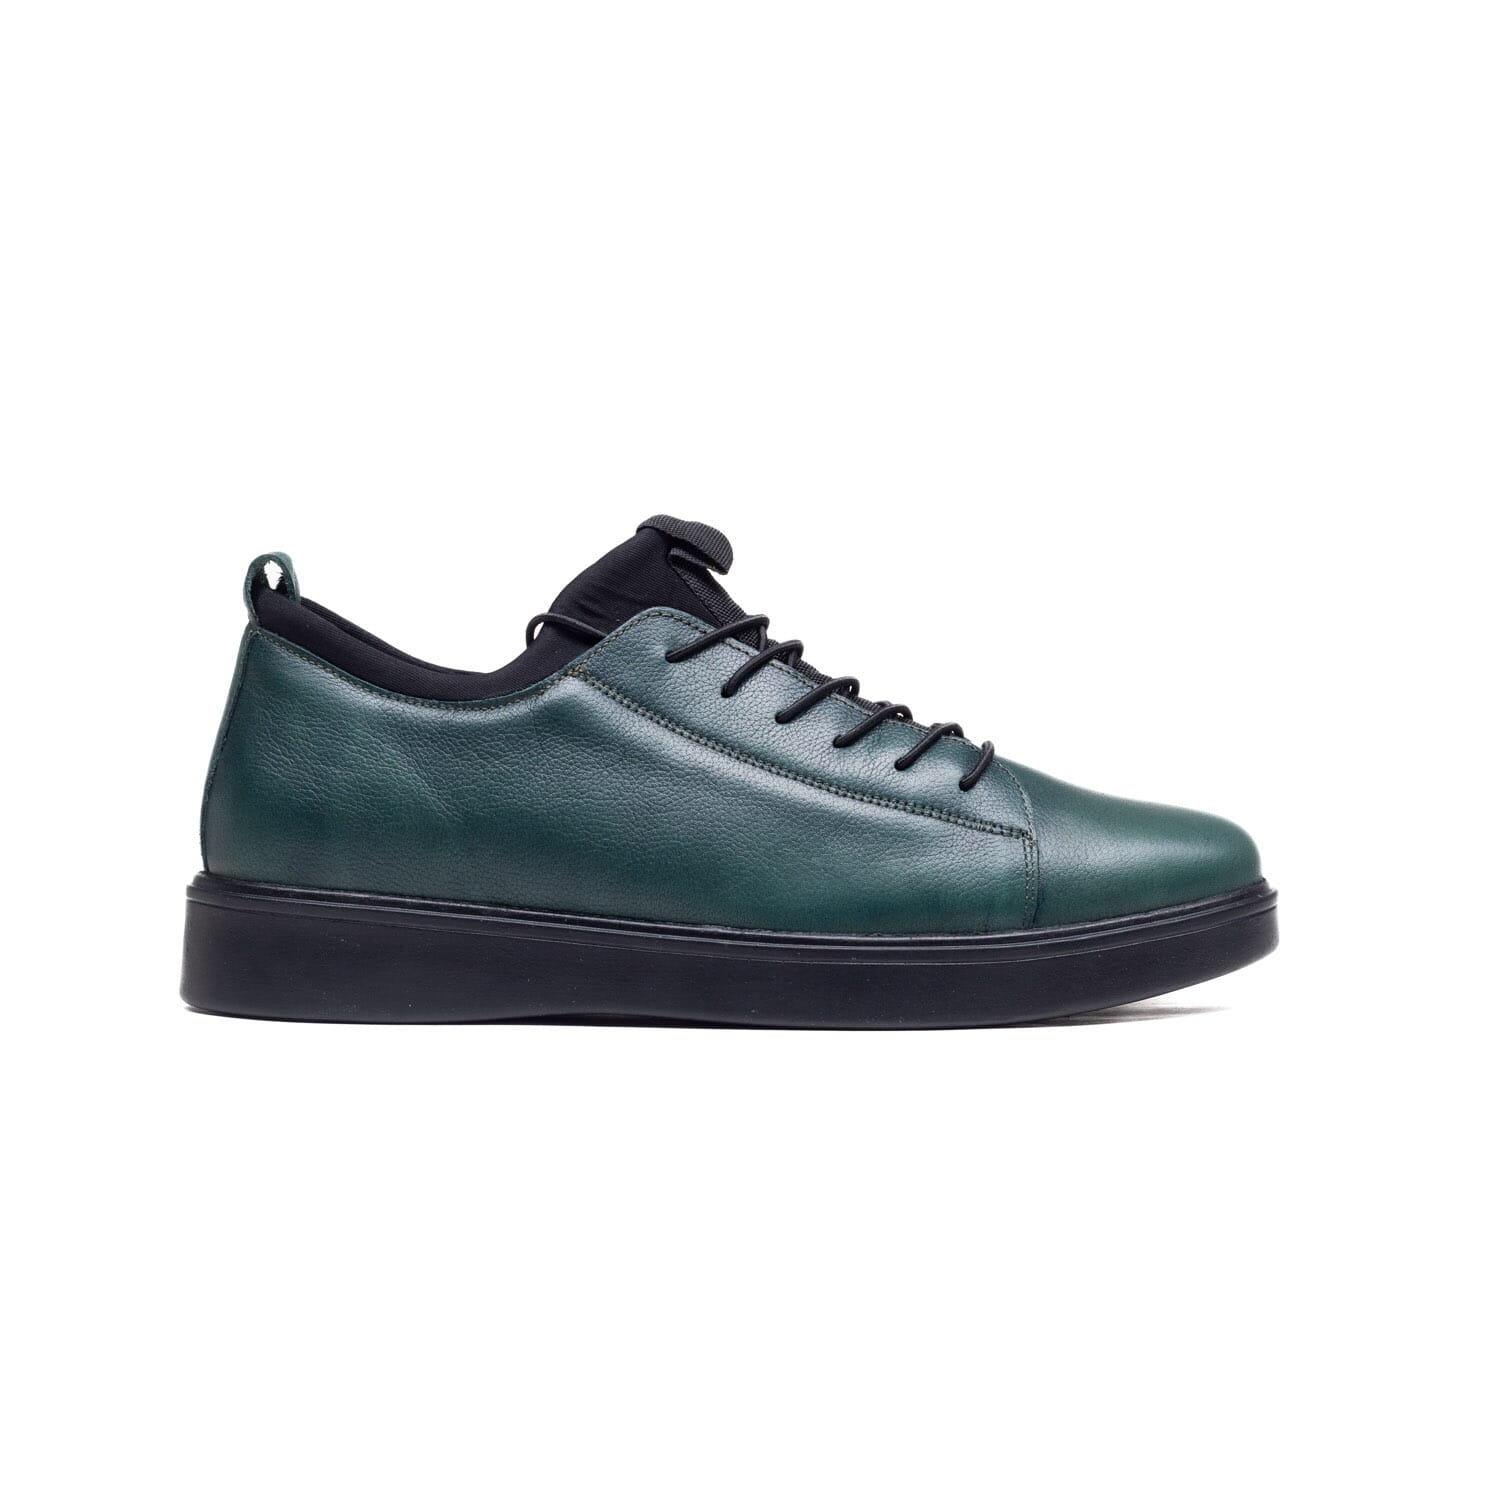 Pepita – 4990 – Green – Perocili Shoes